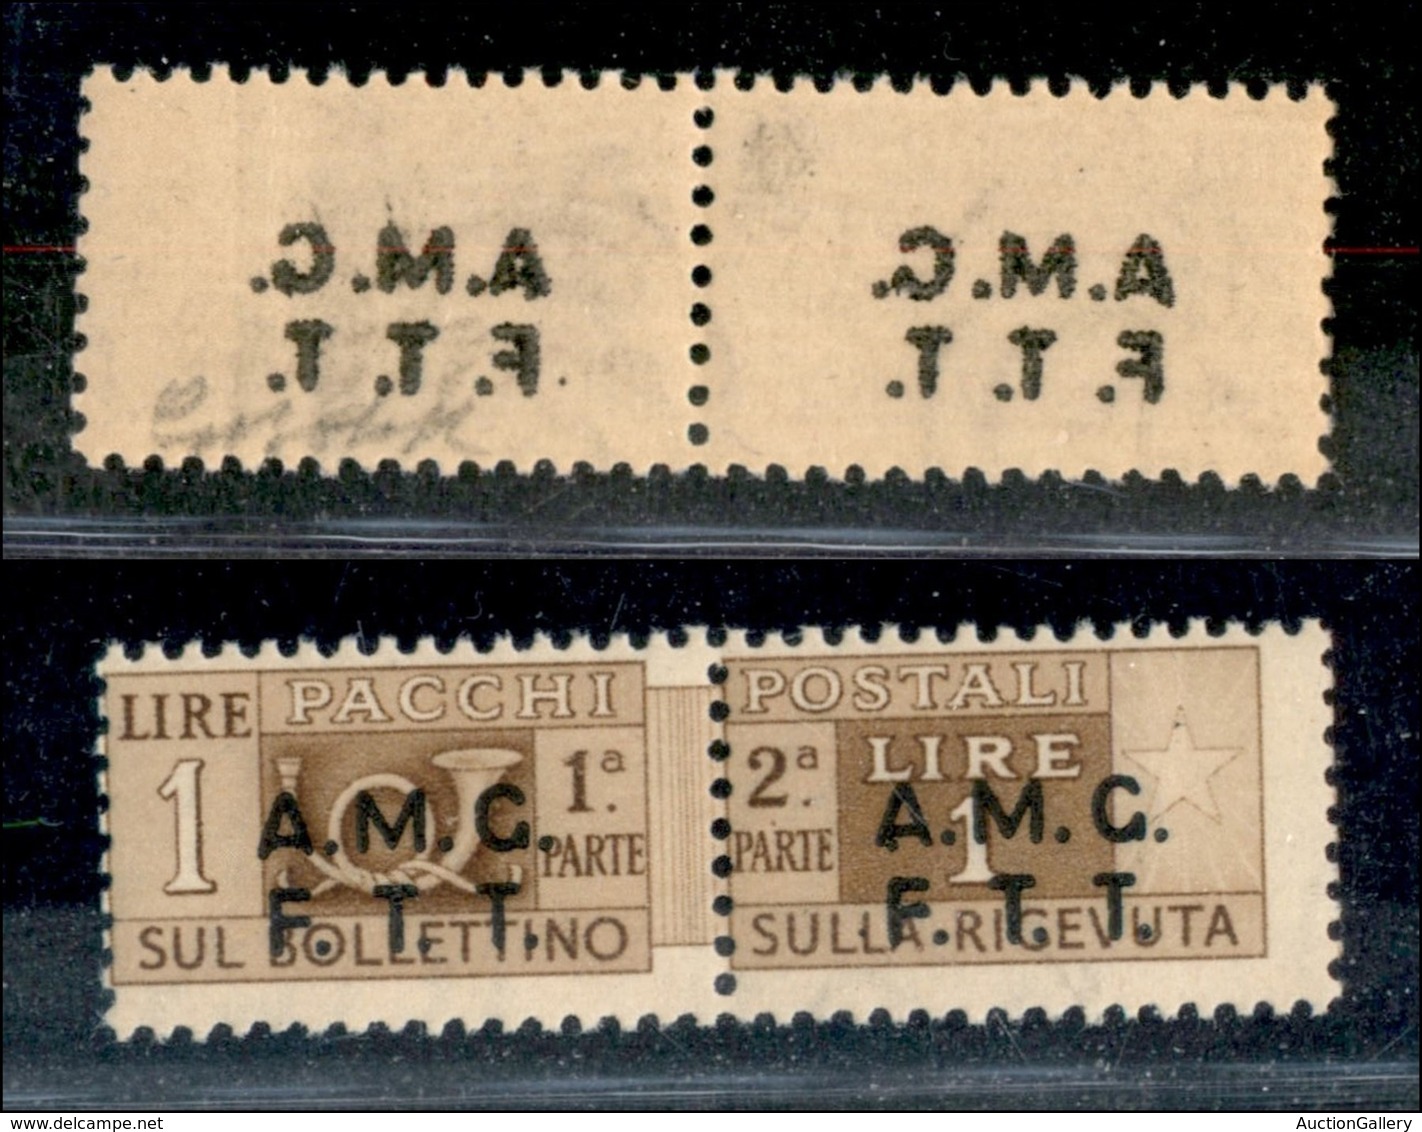 TRIESTE - AMG-FTT - 1947 - 1 Lira Pacchi Postali (1 K) Con Decalco - Gomma Integra - G.Bolaffi - Ungebraucht